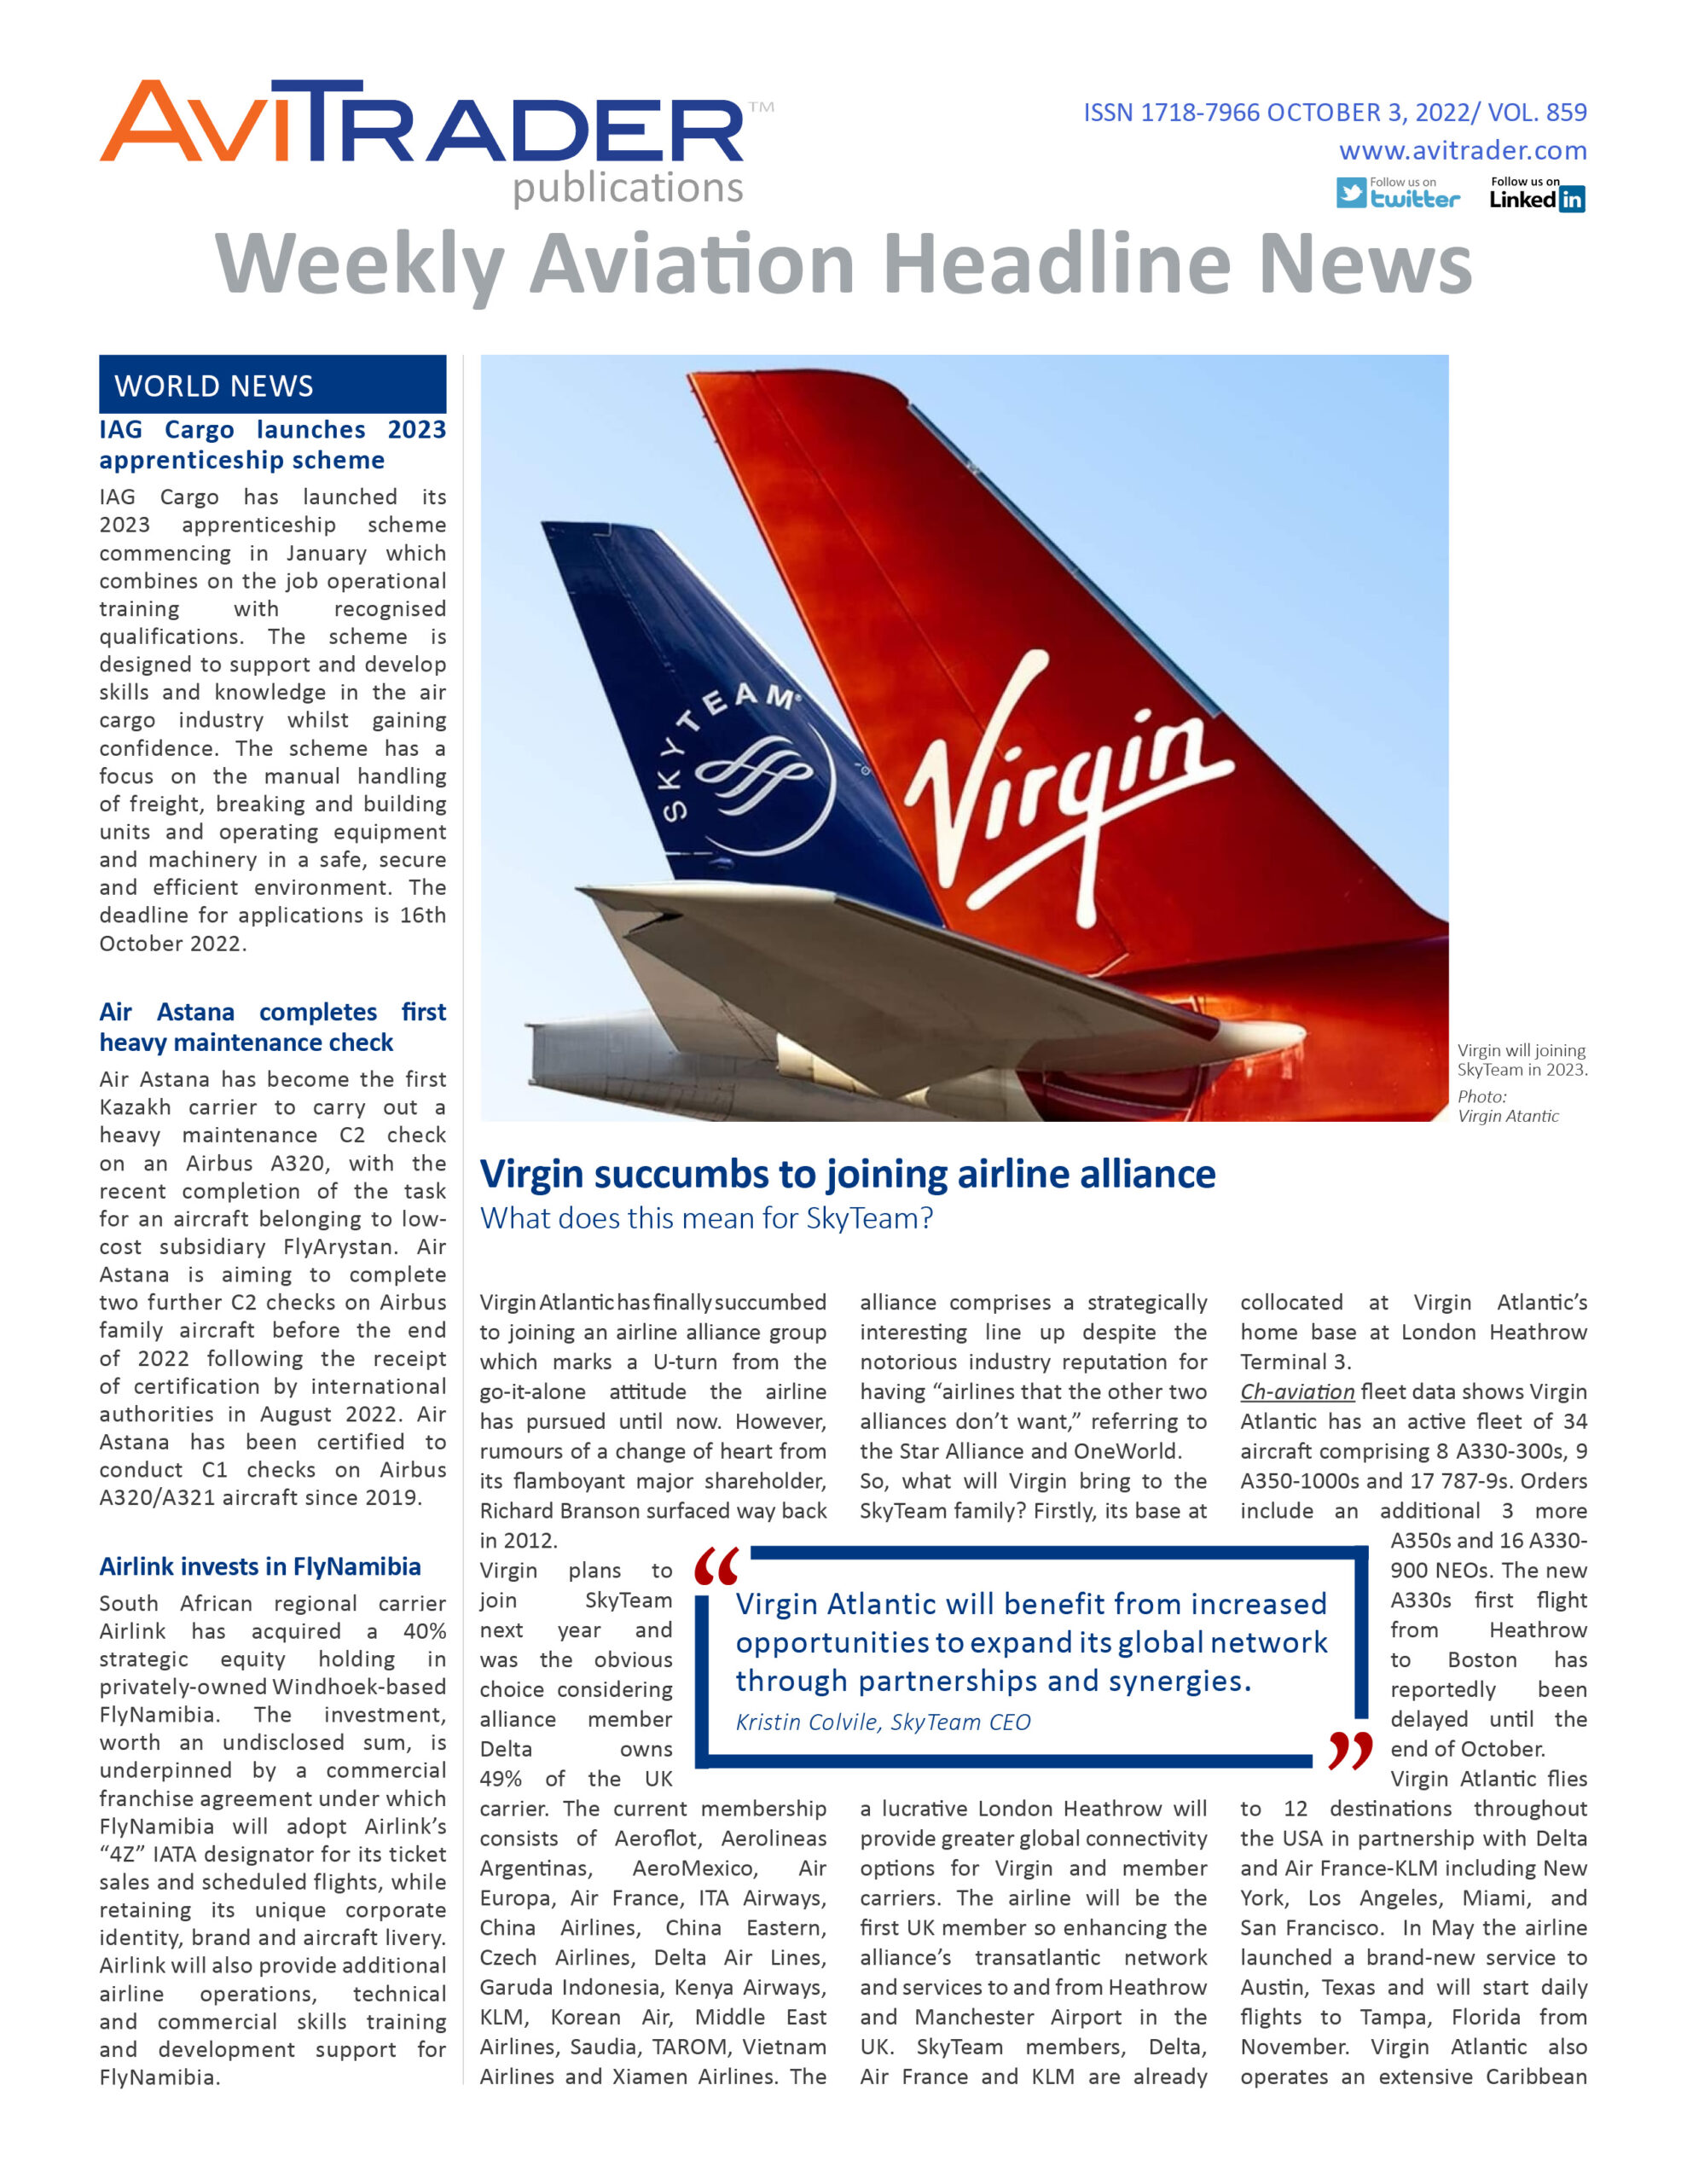 AviTrader_Weekly_Headline_News_Cover_2022-10-03